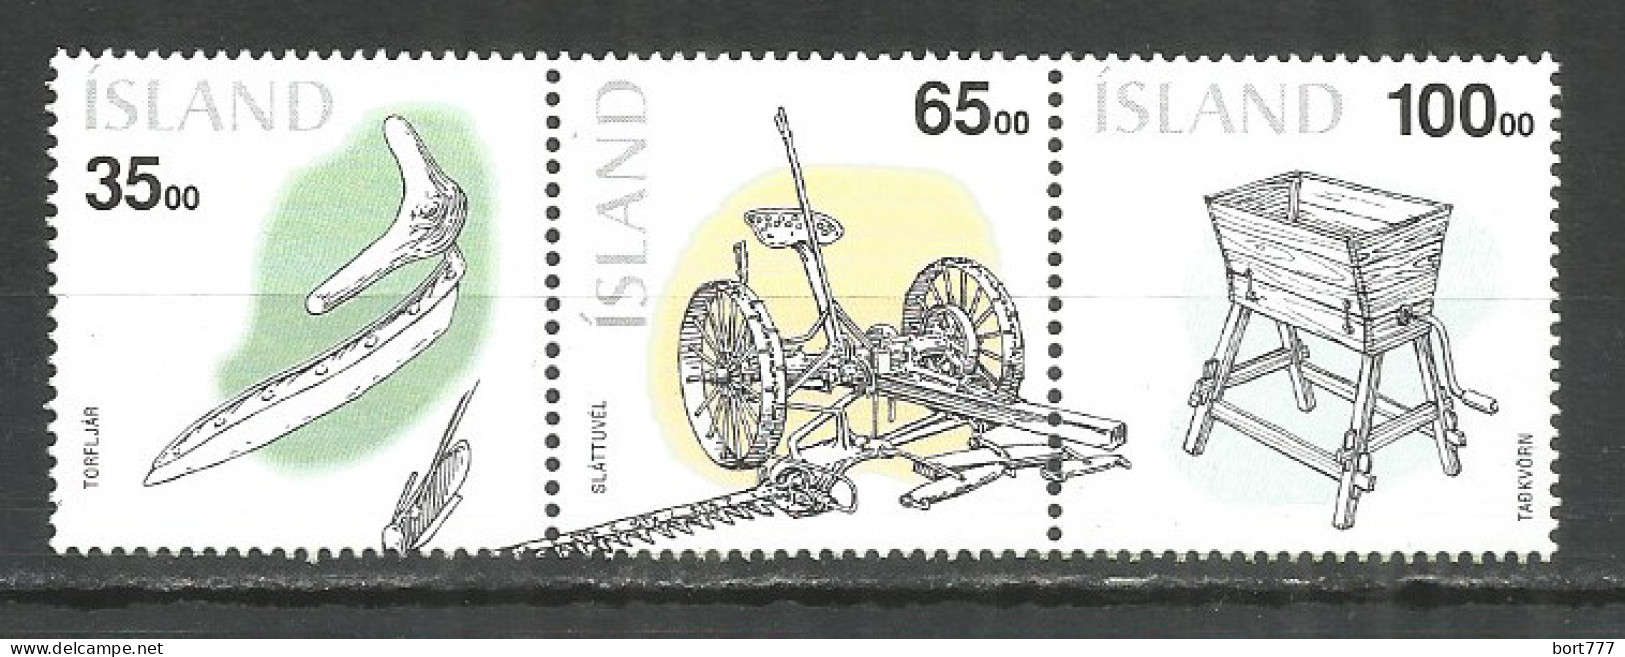 ICELAND 1998 Mint Stamps MNH(**) Set  - Ungebraucht